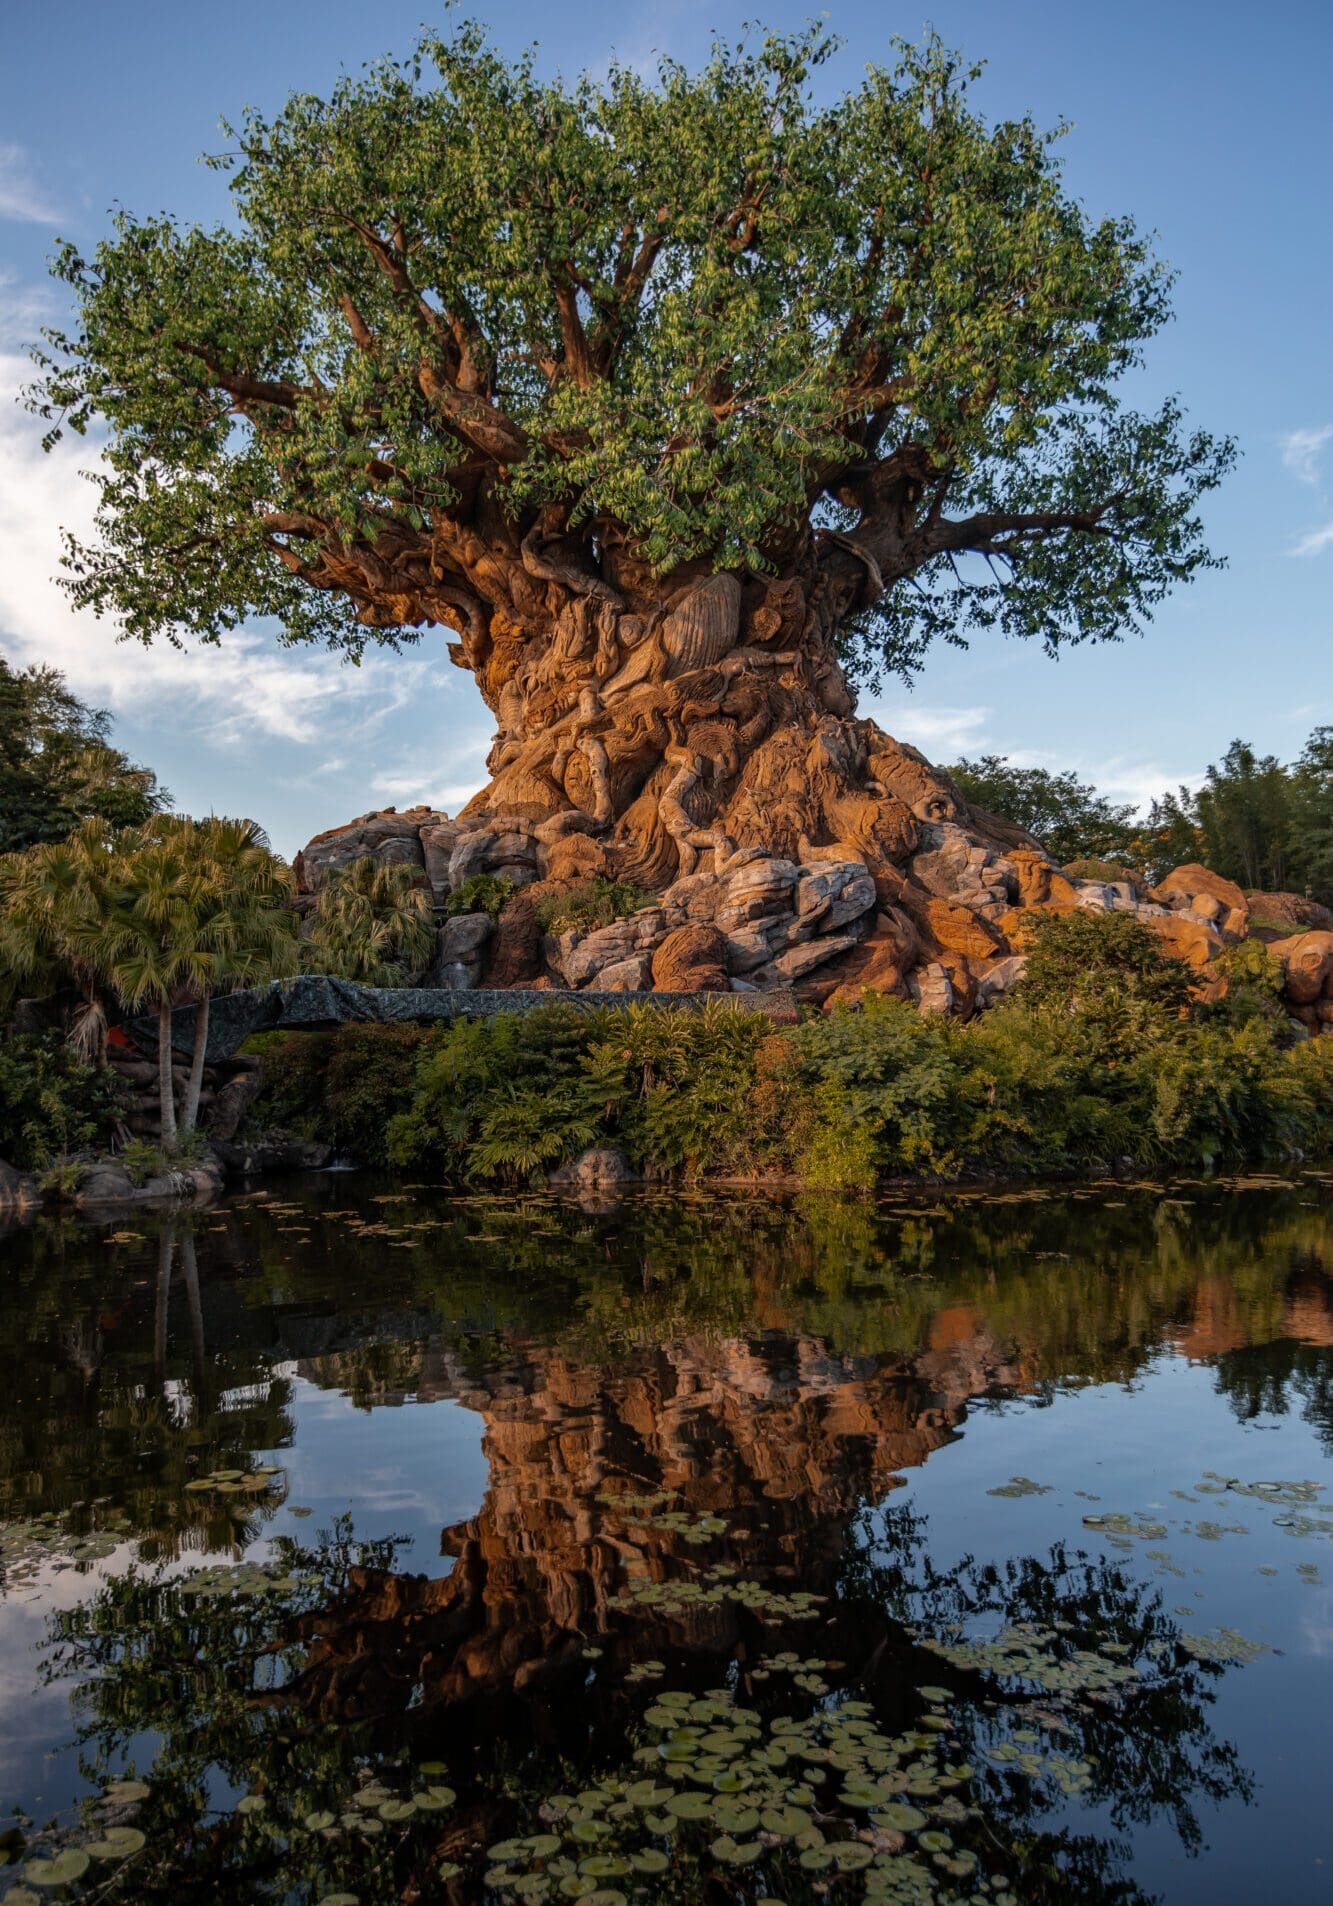 Tree of Life Animal Kingdom Photo Spots Disney World Florida Travel Holiday Guide UK Travel Blogger Instagram Photo Spots